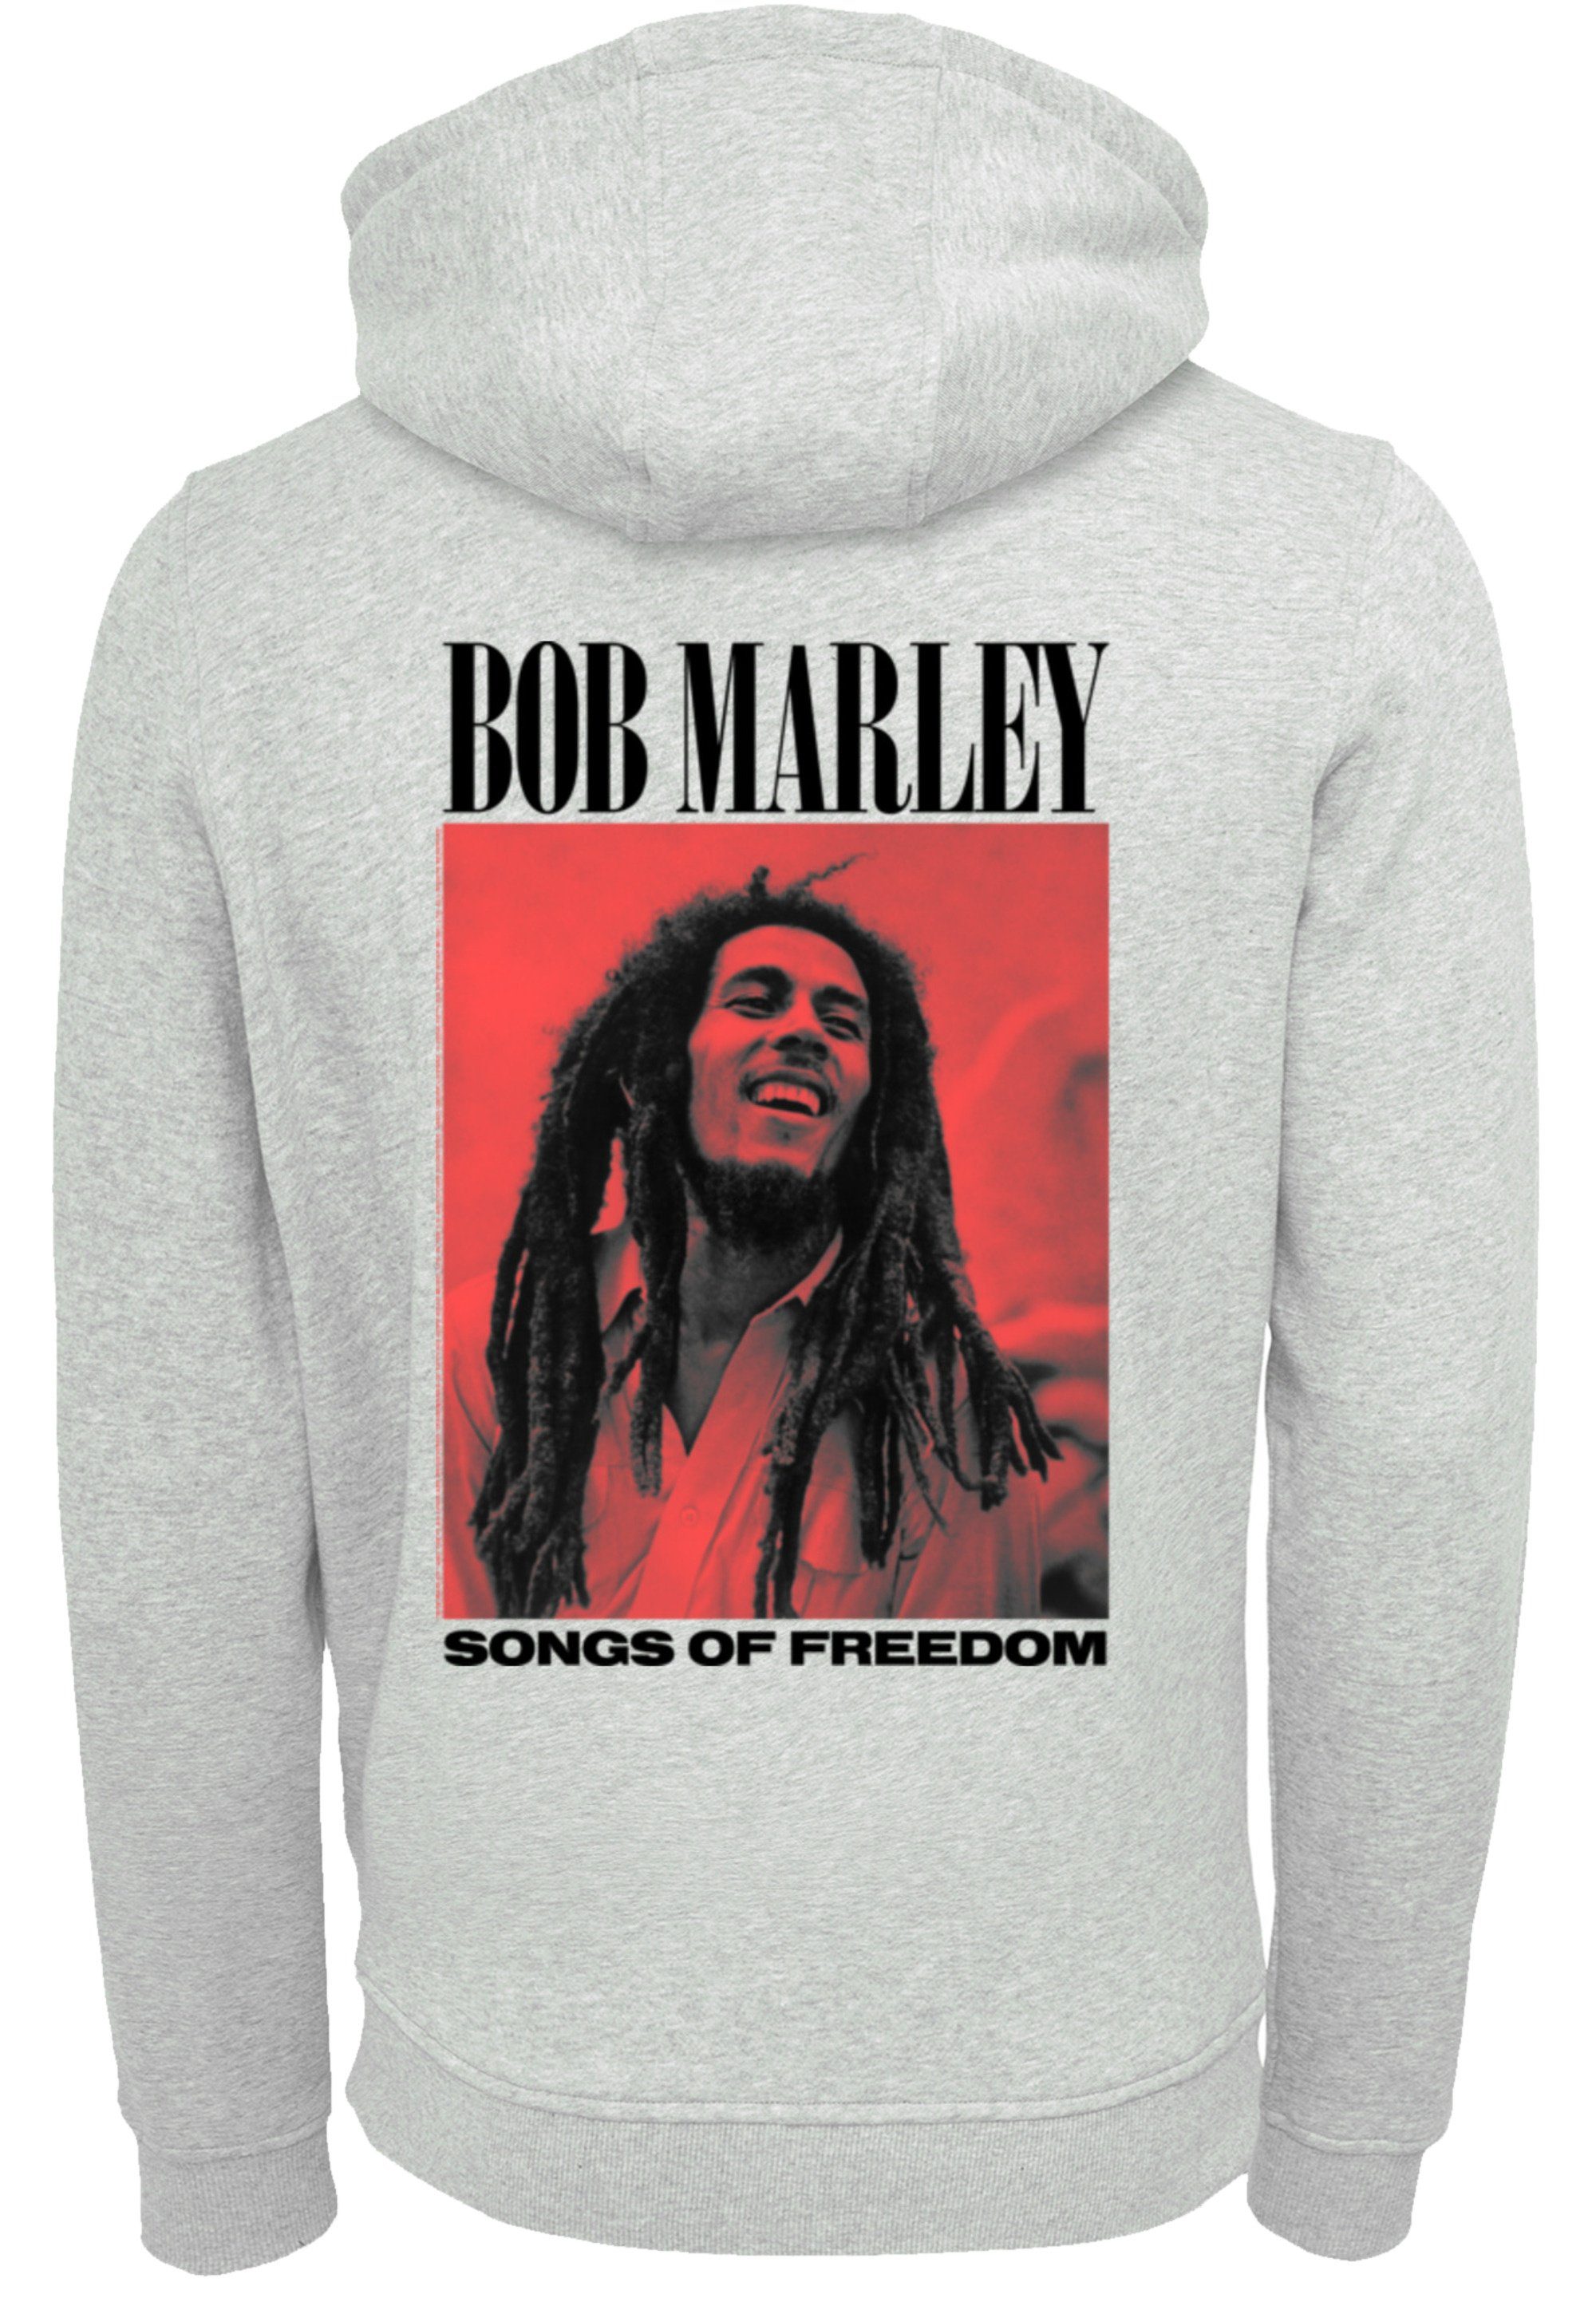 Musik, grey heather Off Of Qualität, F4NT4STIC Premium Hoodie By Marley Bob Music Freedom Songs Rock Reggae